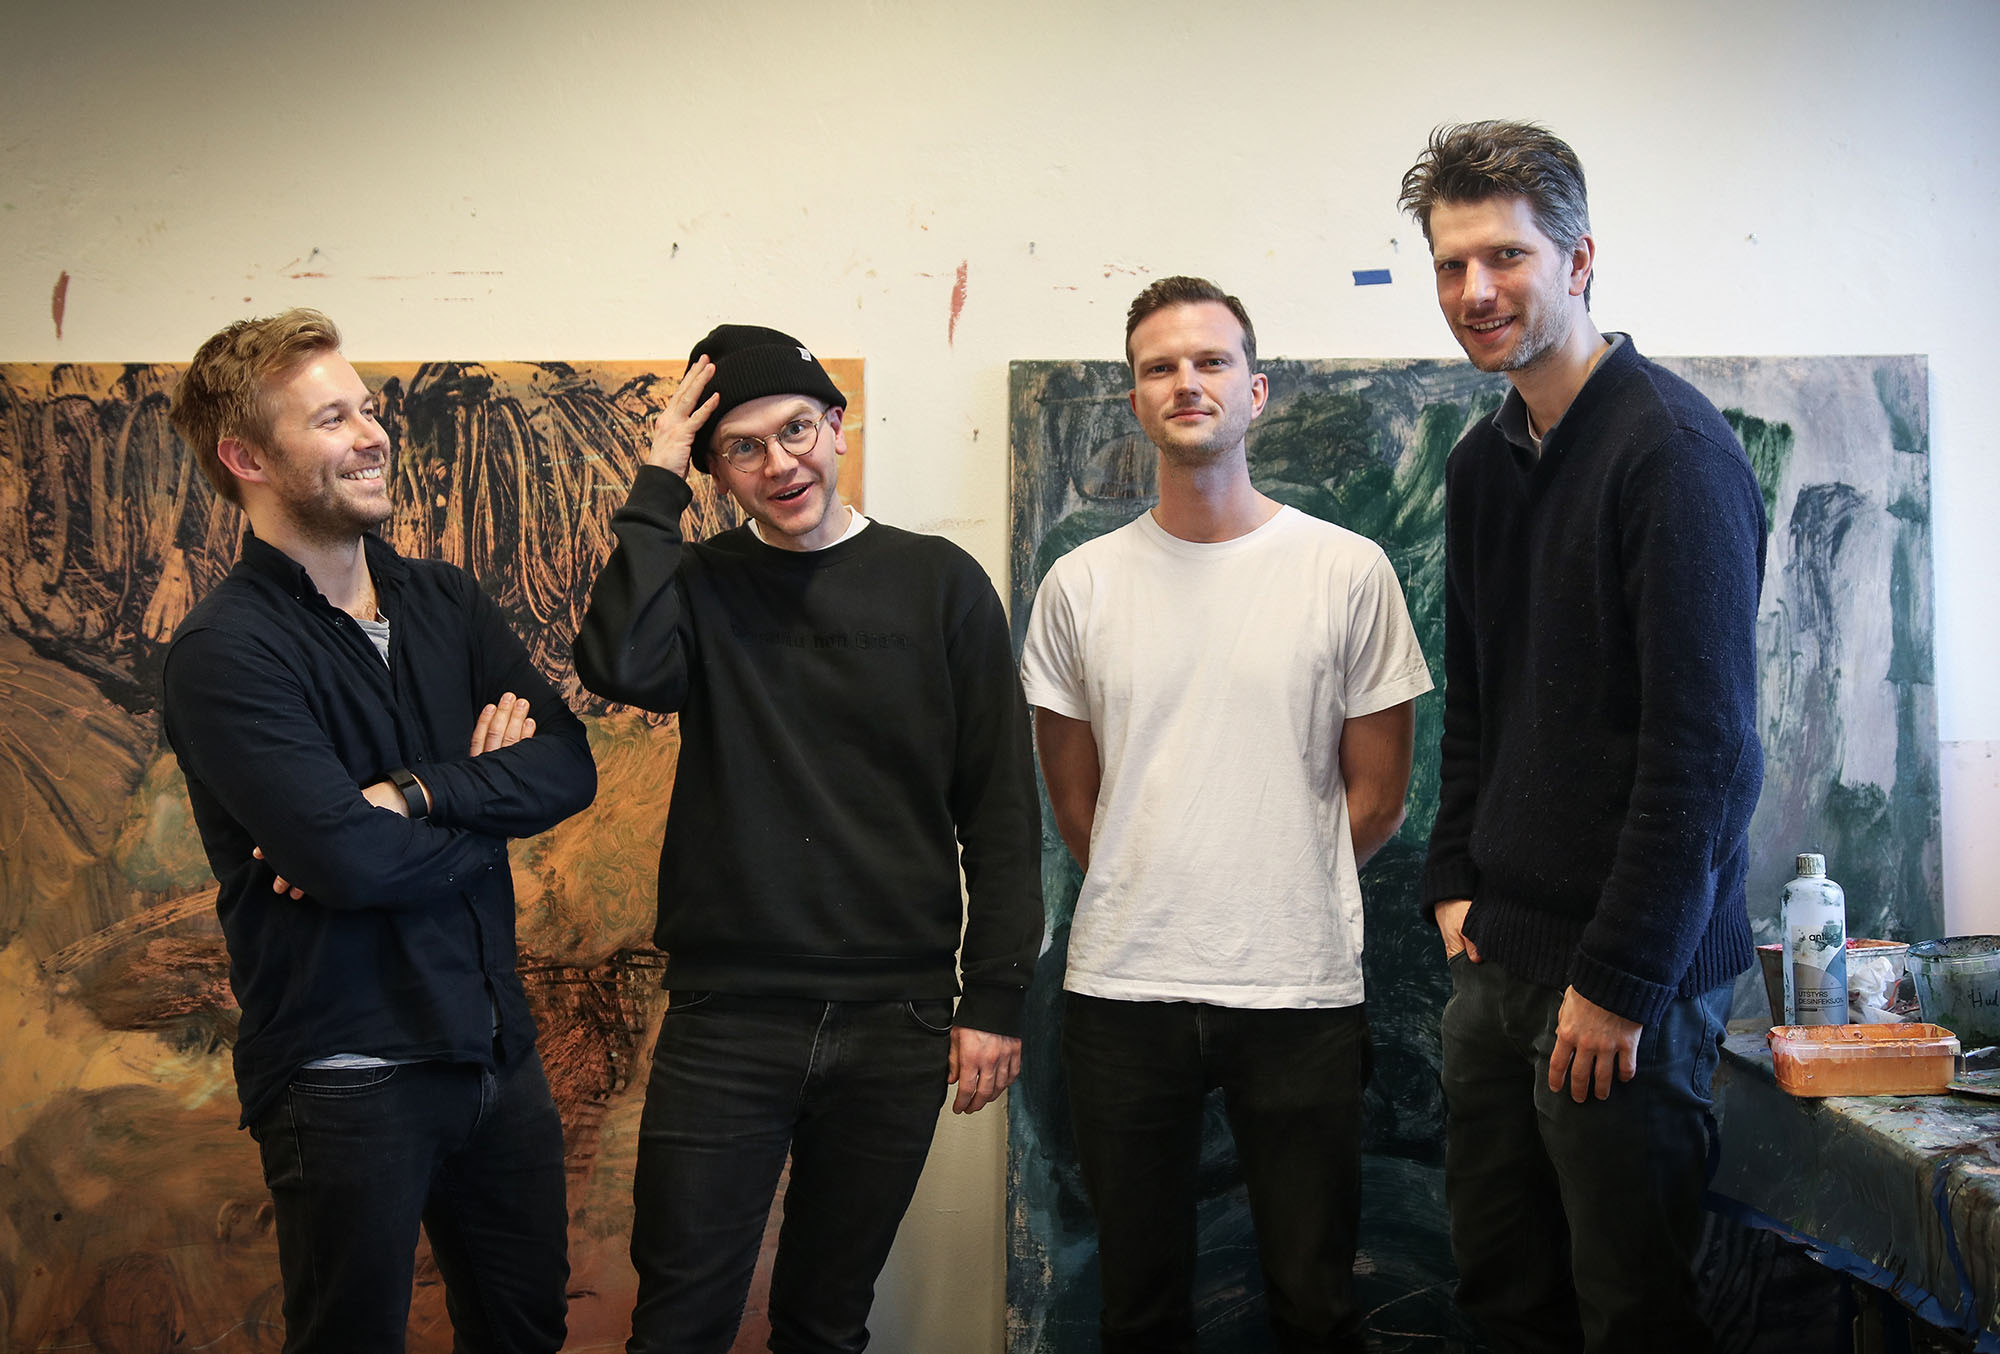 Atelier founders Christian von Hanno, Ruben Steinum, Markus Eckbo Endresen and Mikael Hegnar.